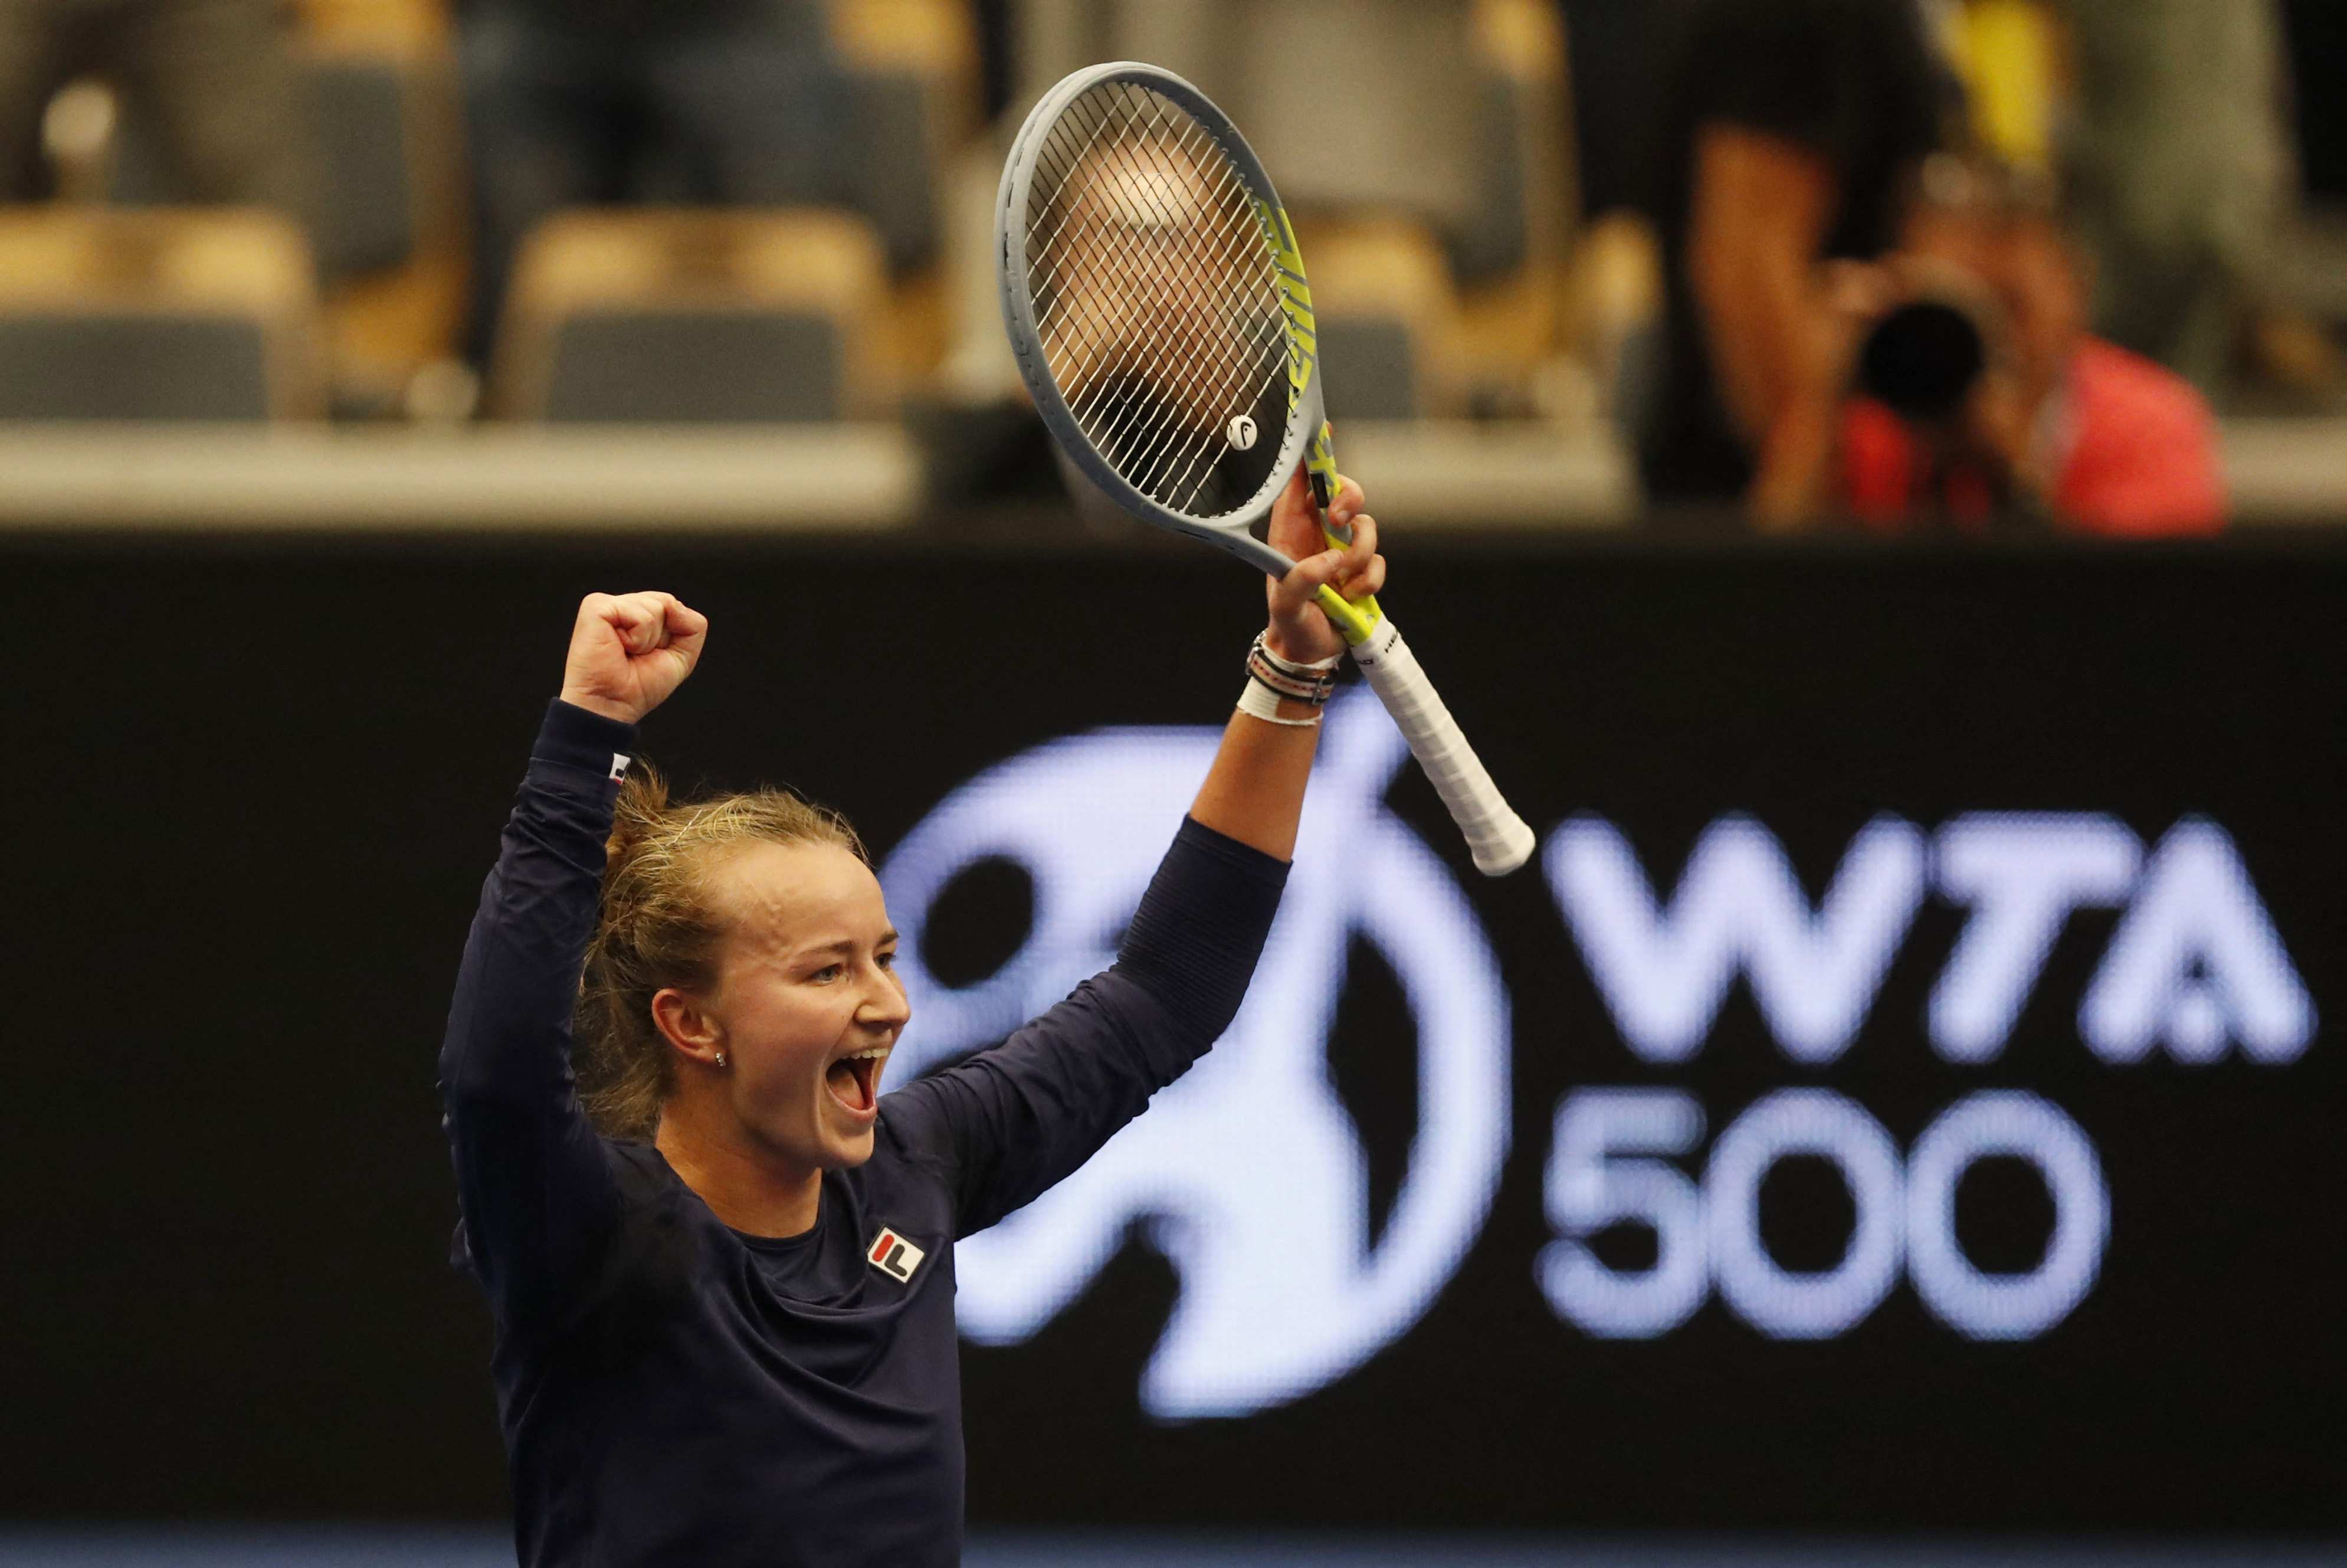 WTA 500 - Ostrava Open